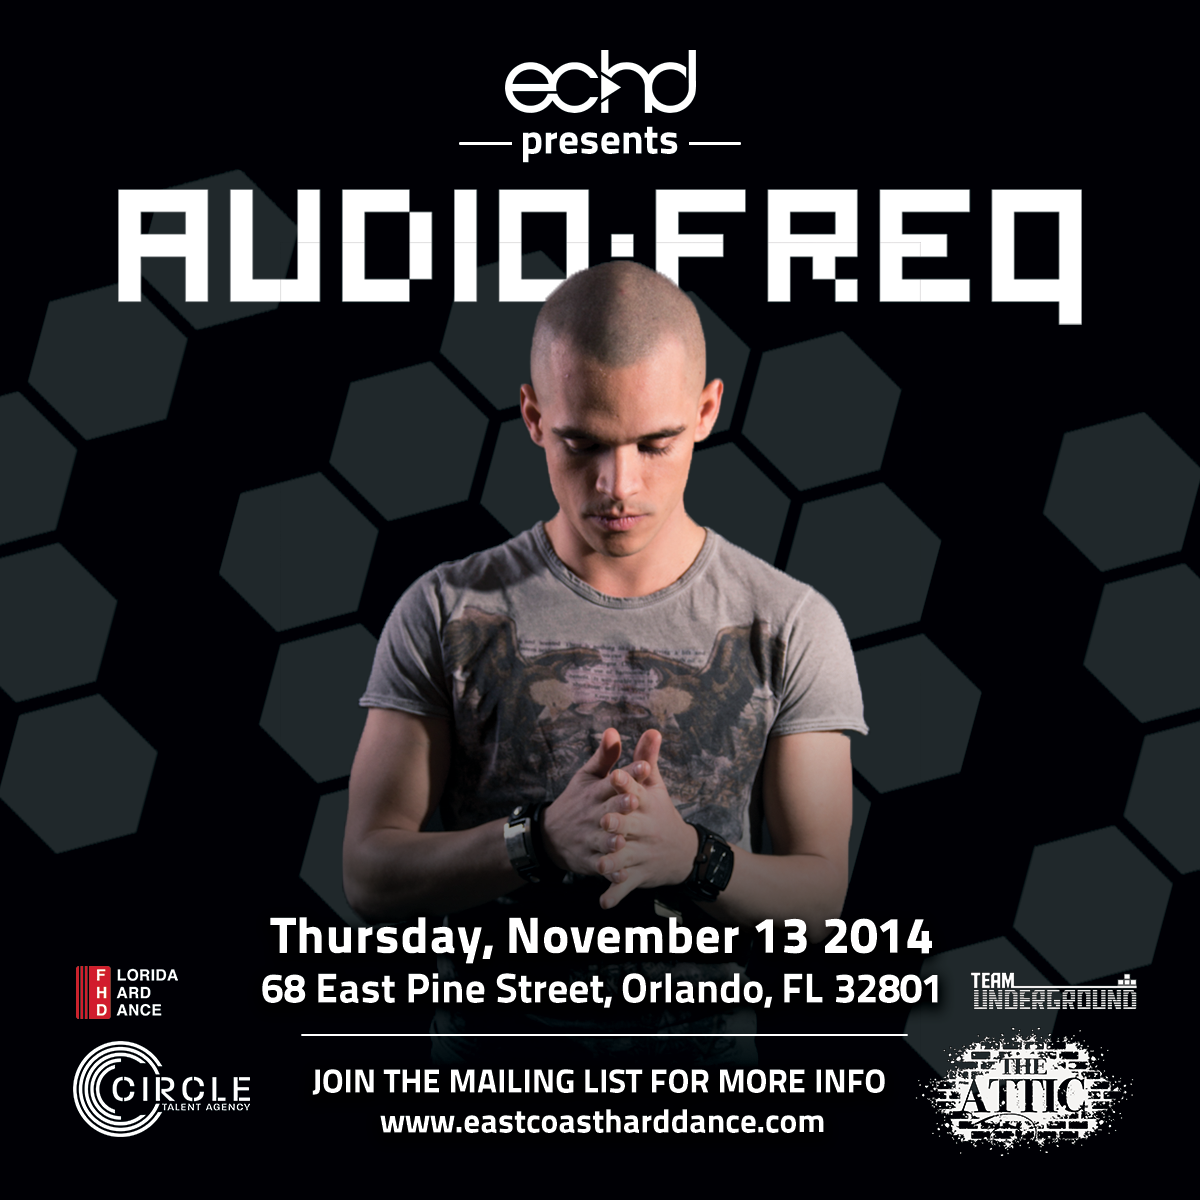 Front of ECHD presents Audiofreq flyer.